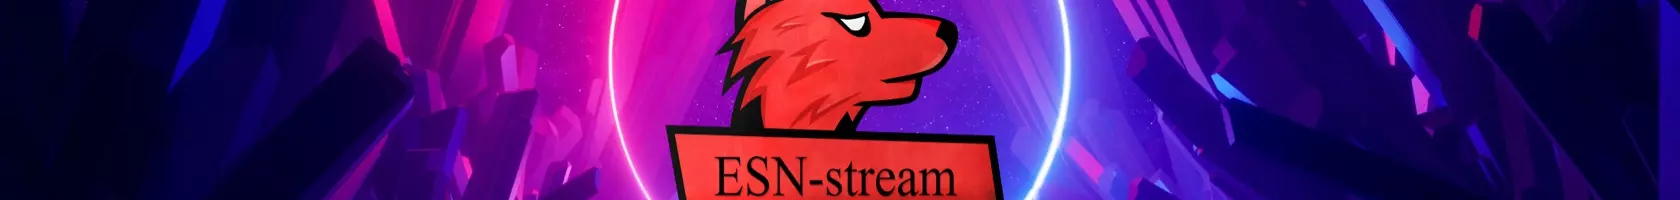  ESN_stream